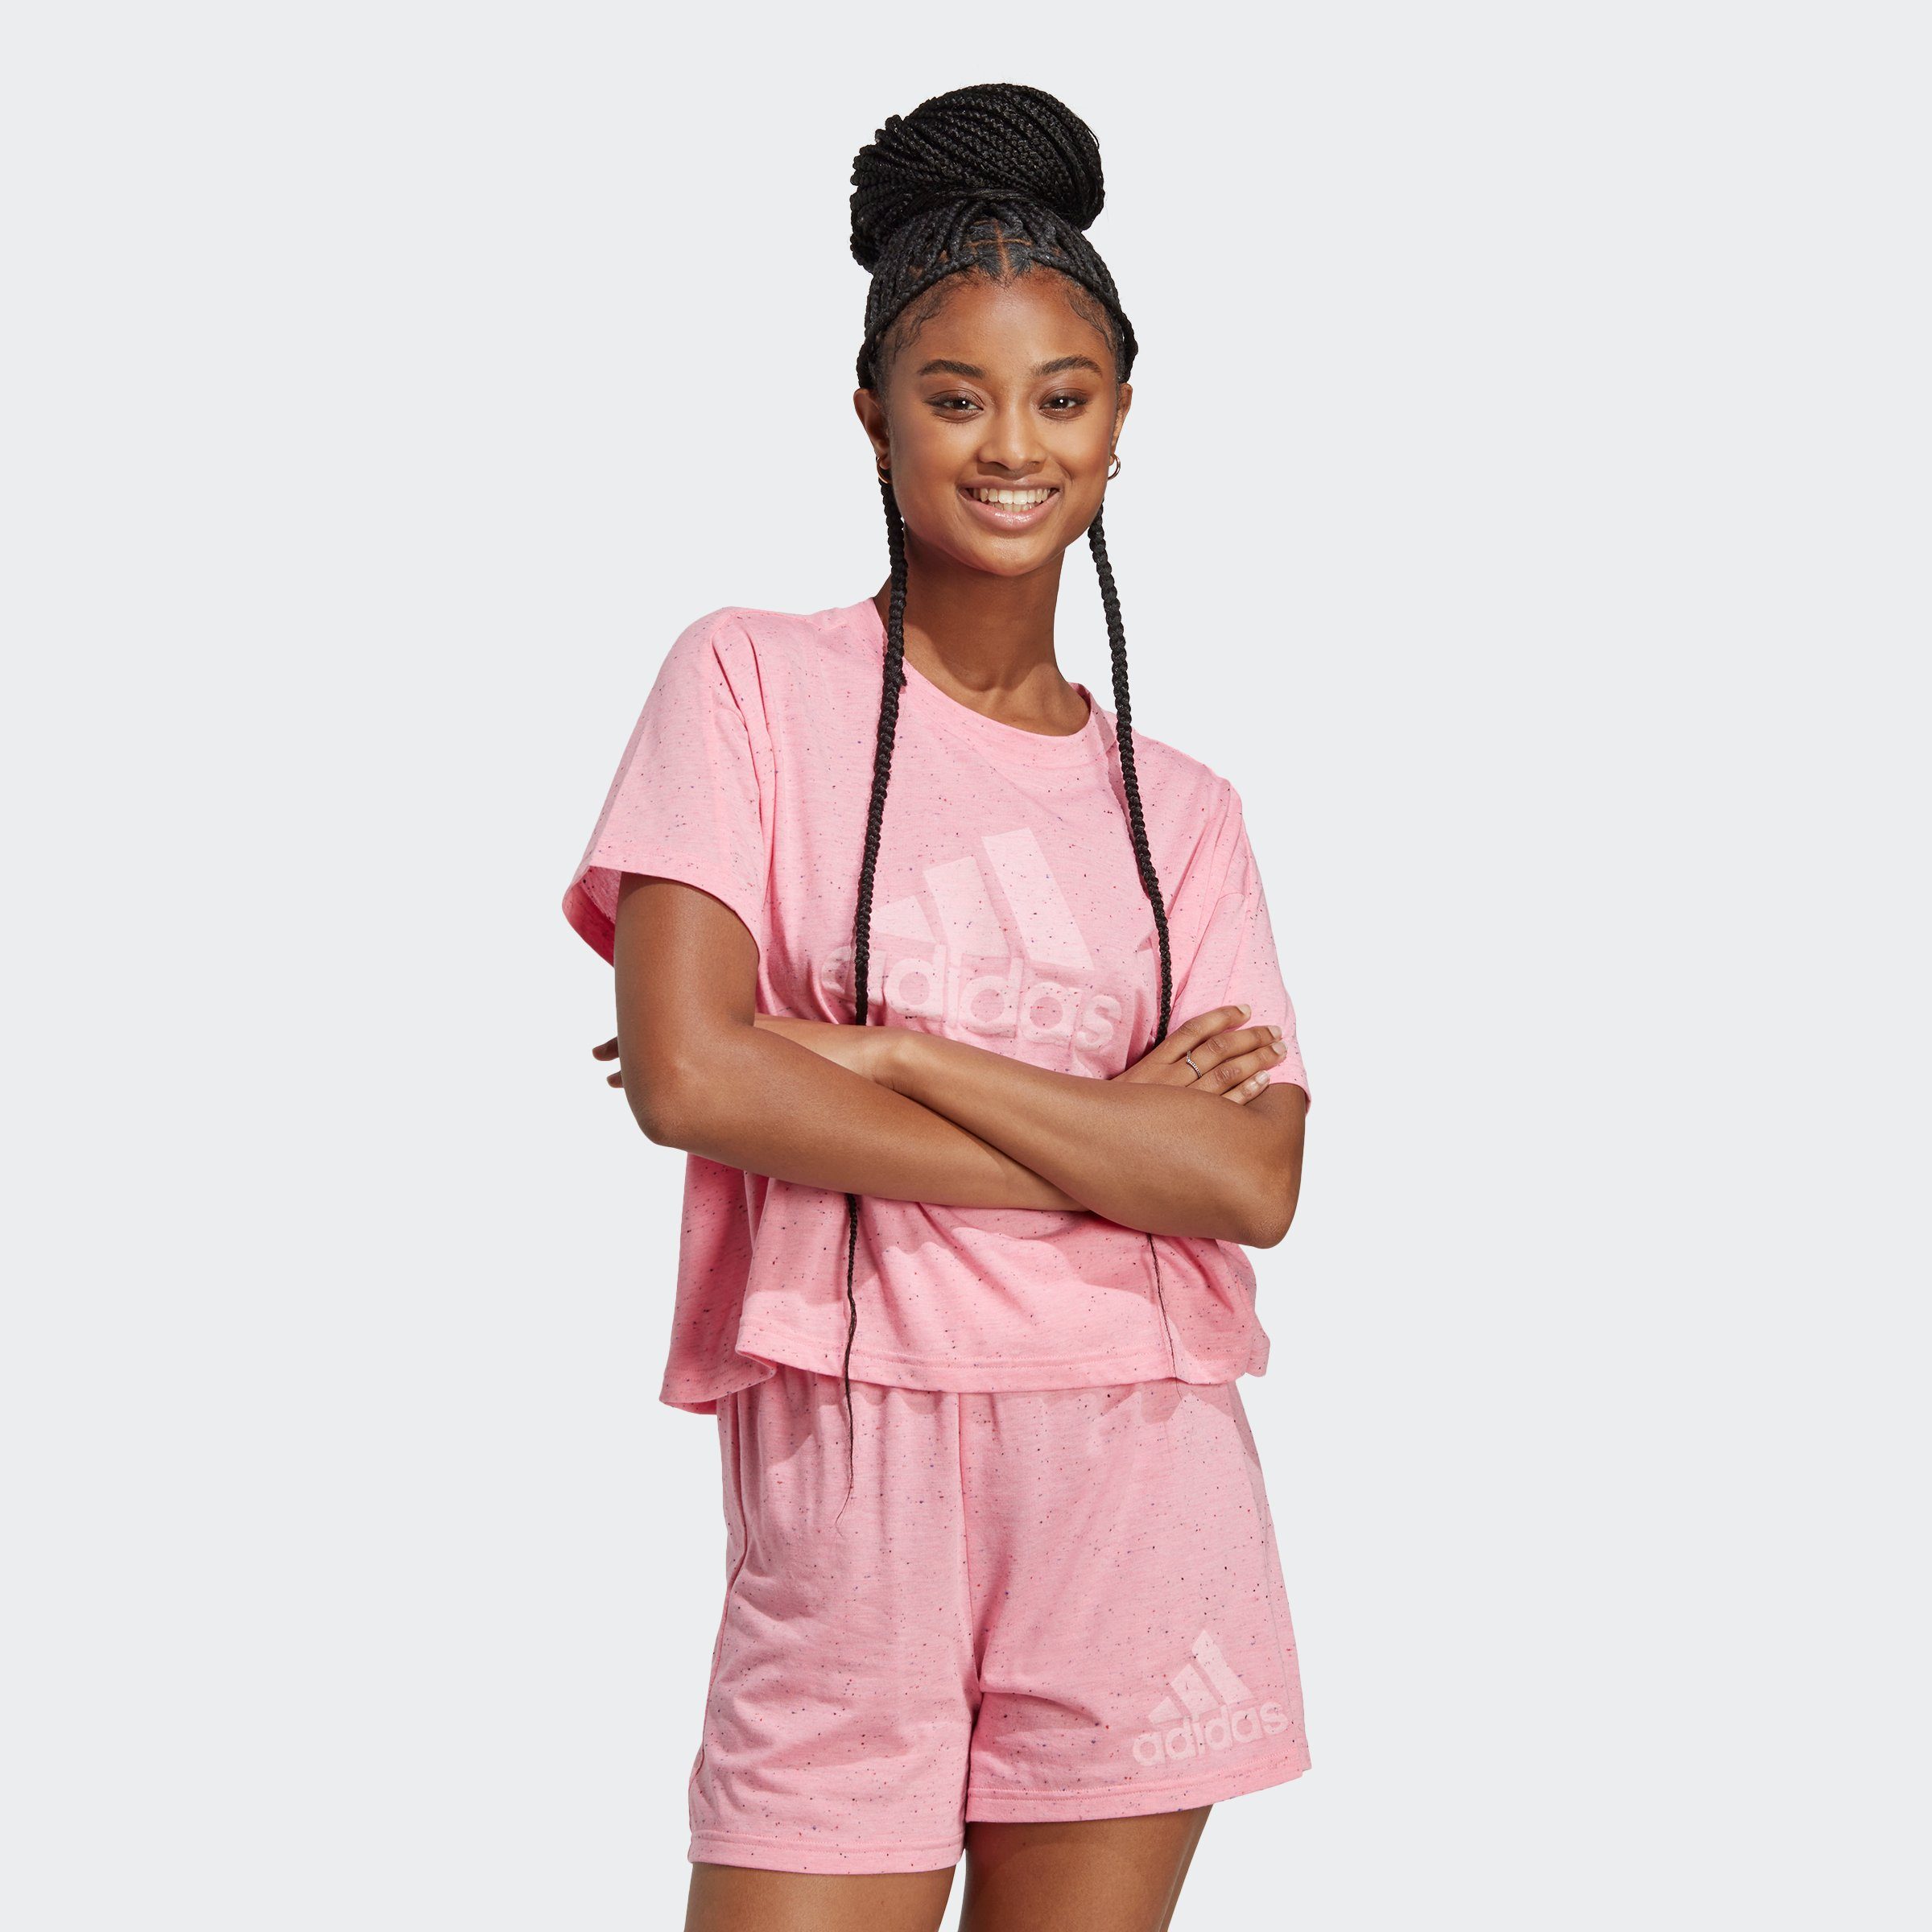 Bliss Mel. / T-Shirt Sportswear Pink ICONS WINNERS White FUTURE adidas